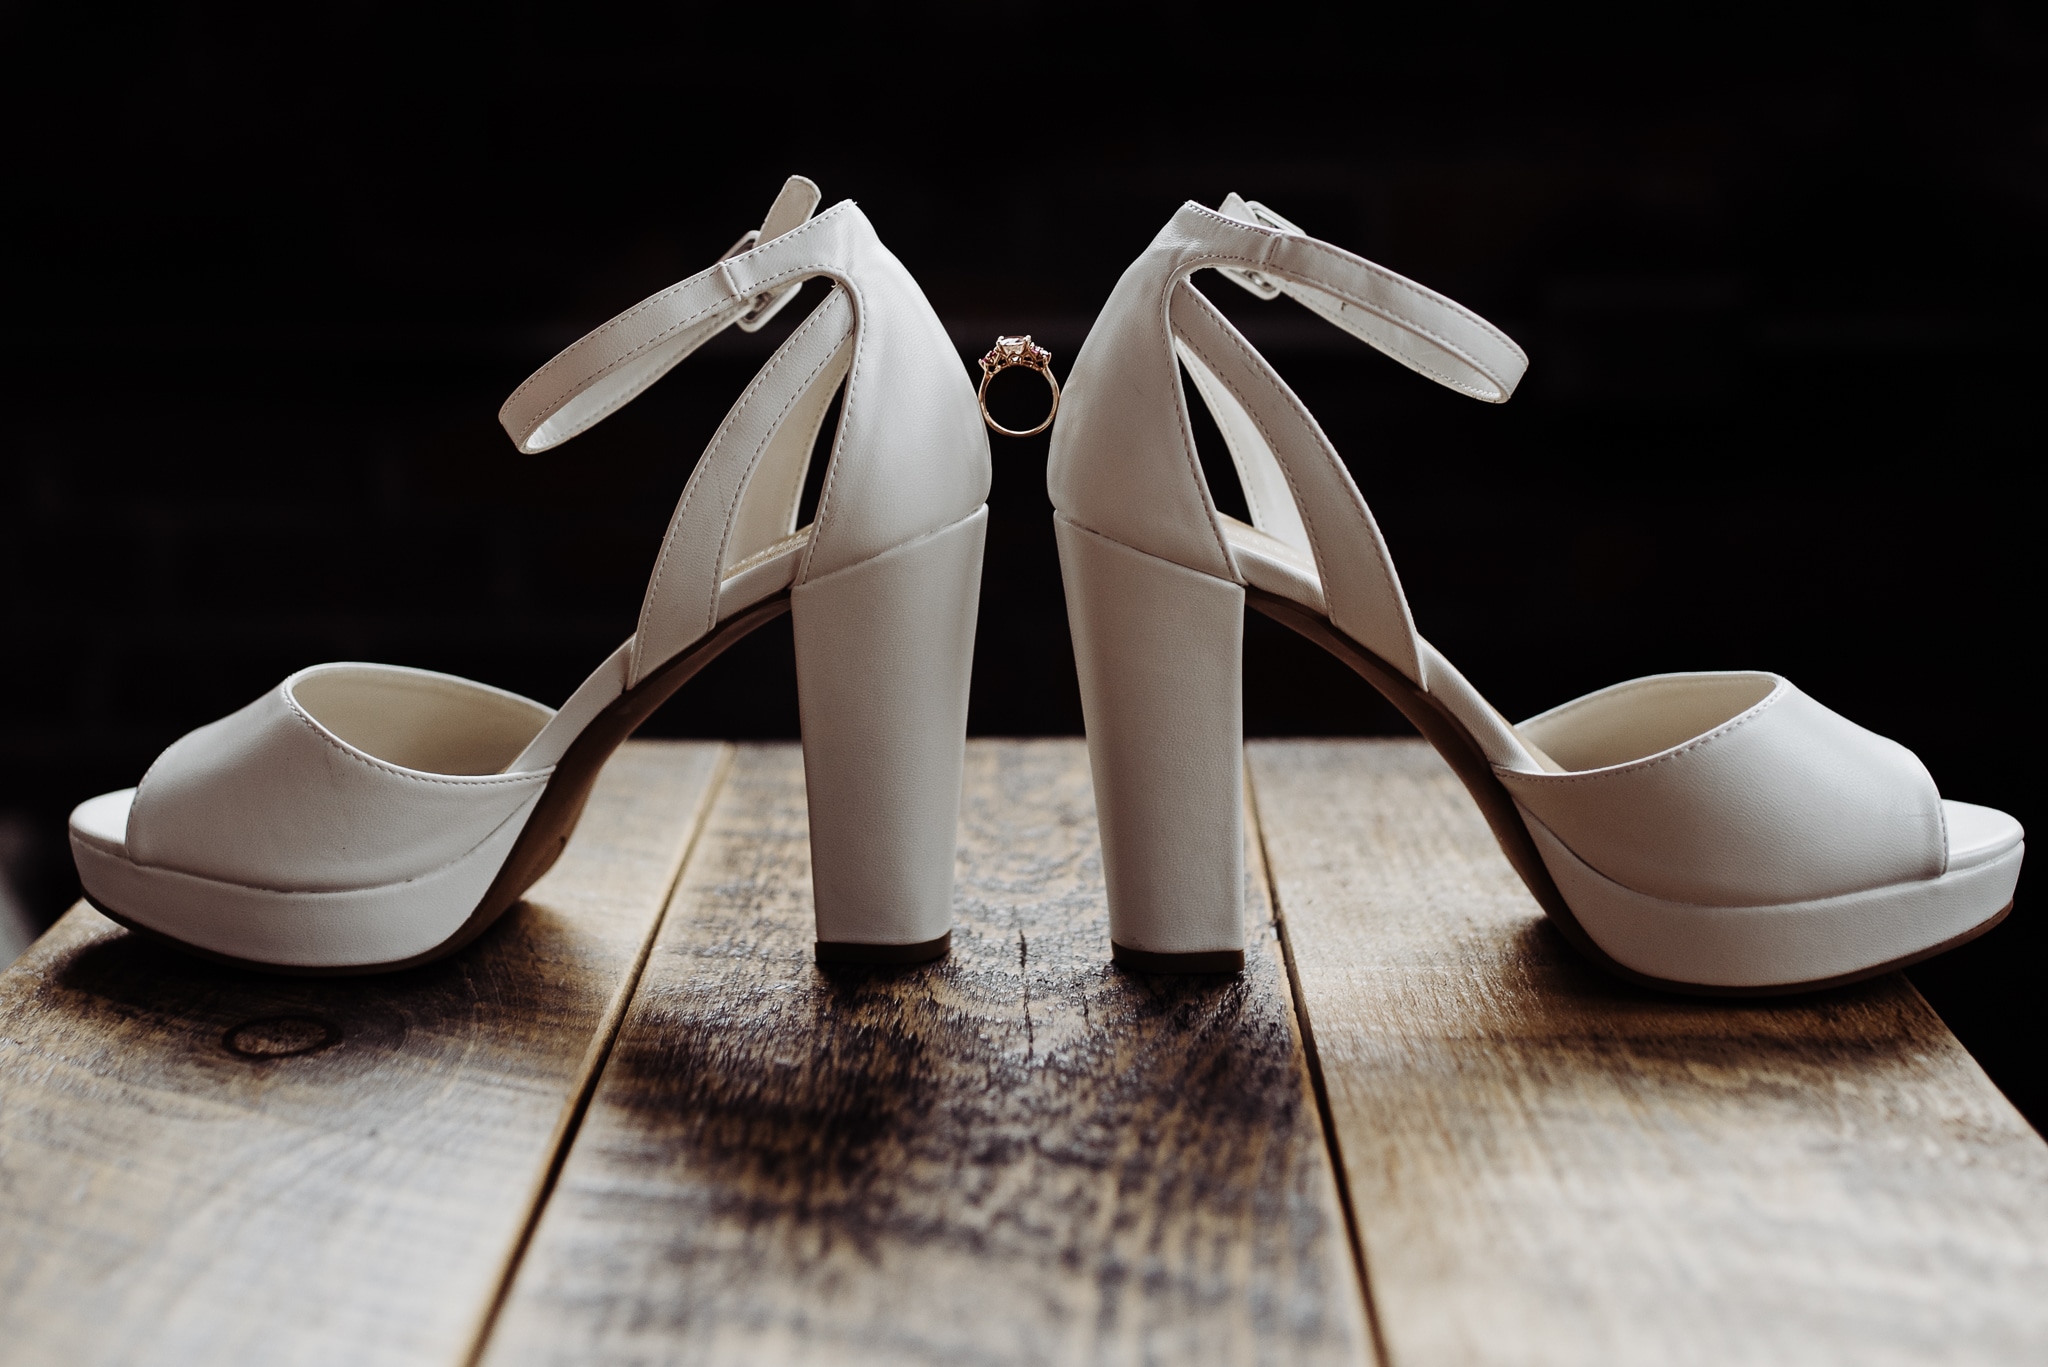 Wedding ring between shoes